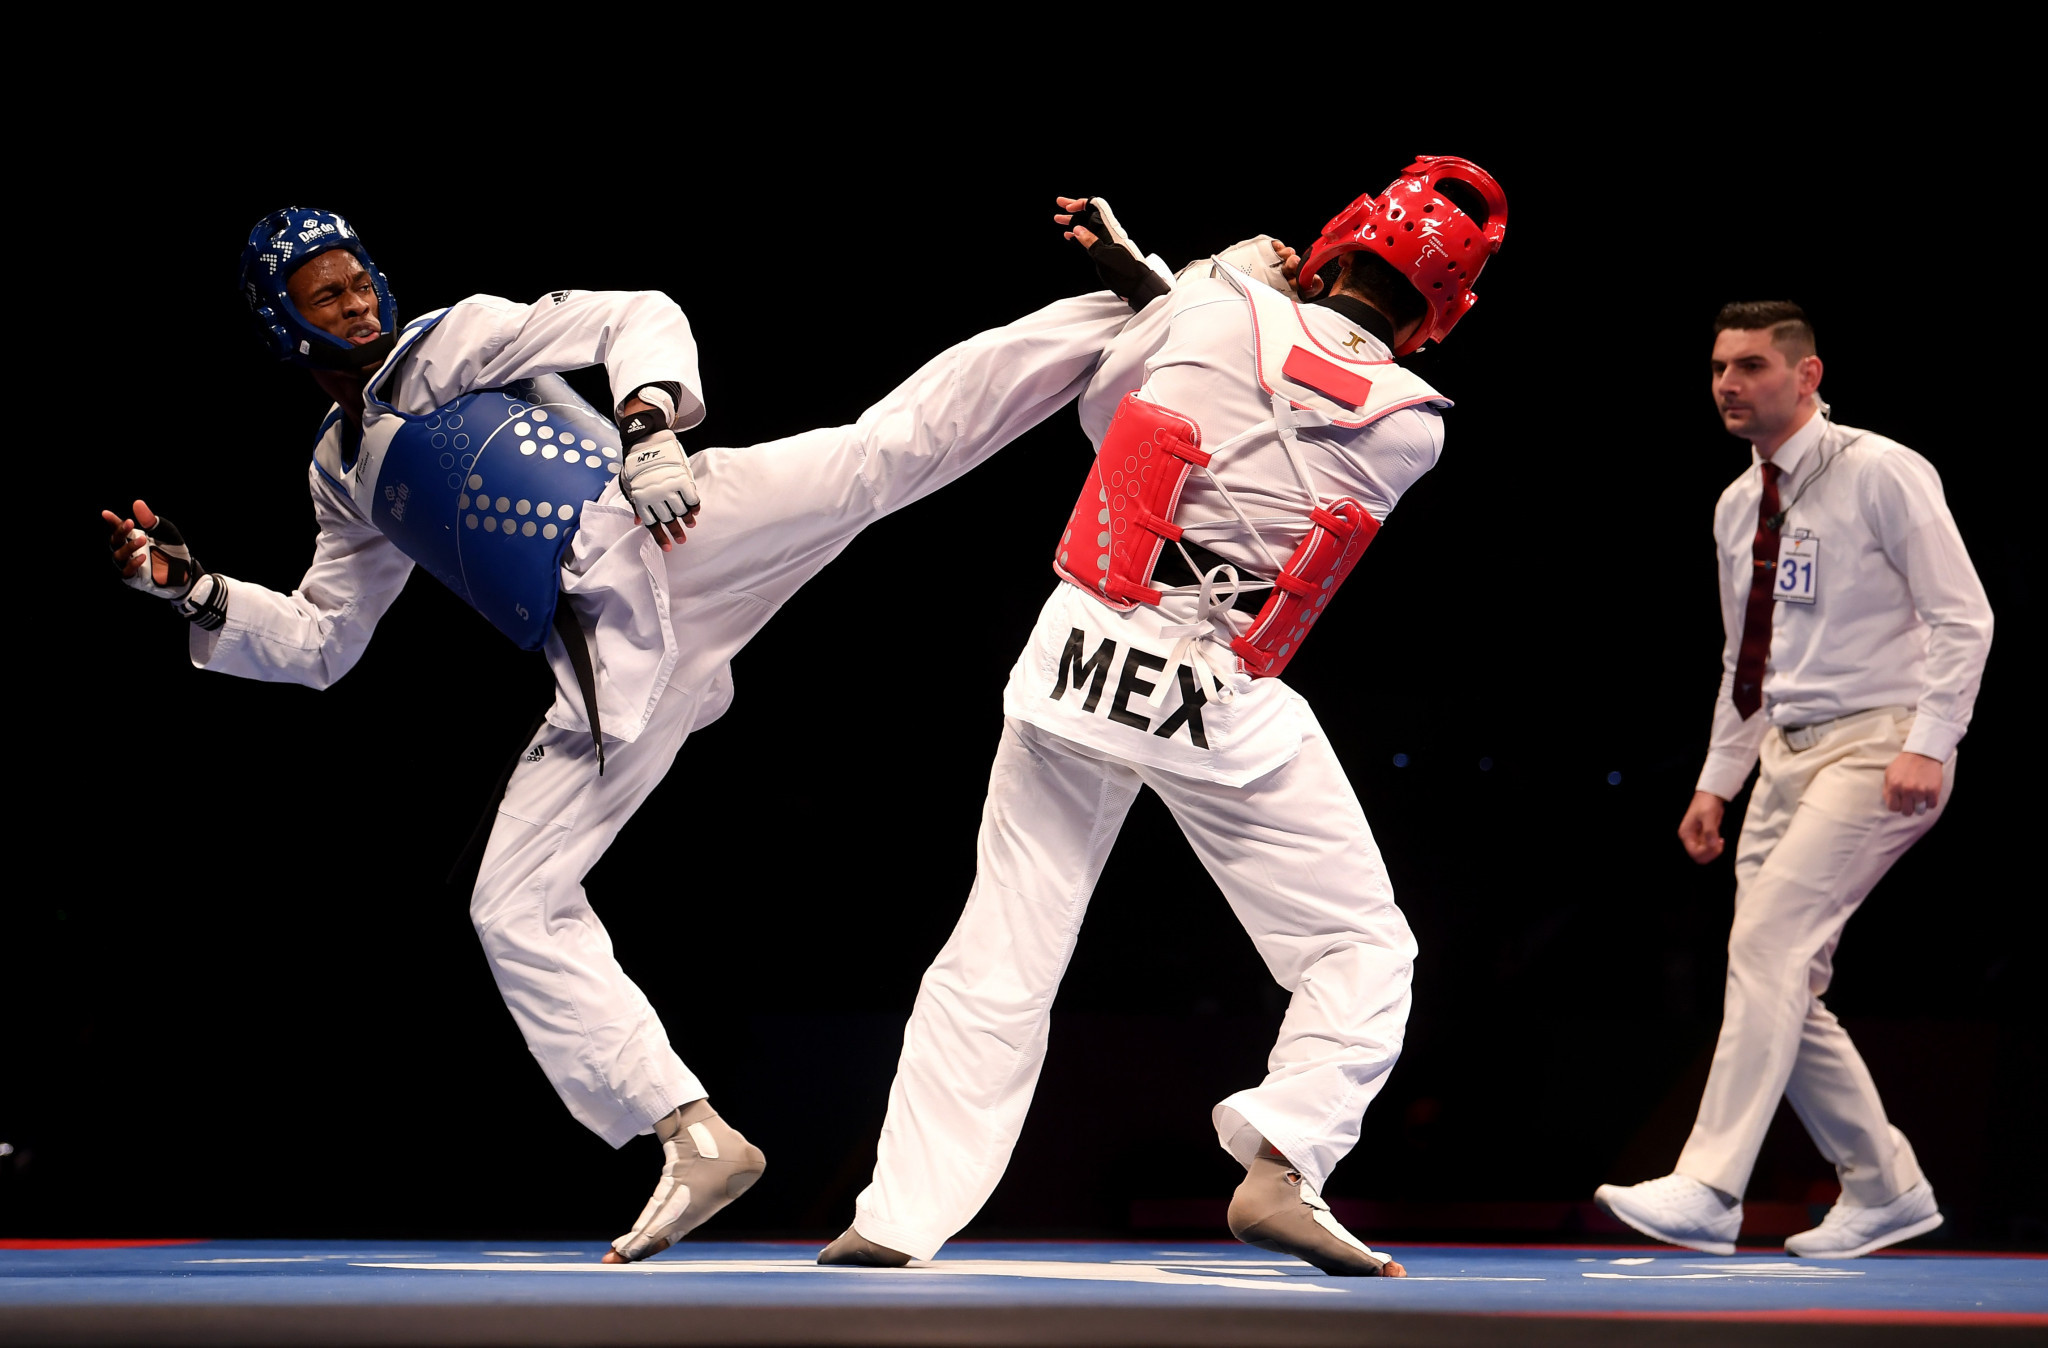 World Taekwondo to assess adjustments to calendar after Tokyo 2020